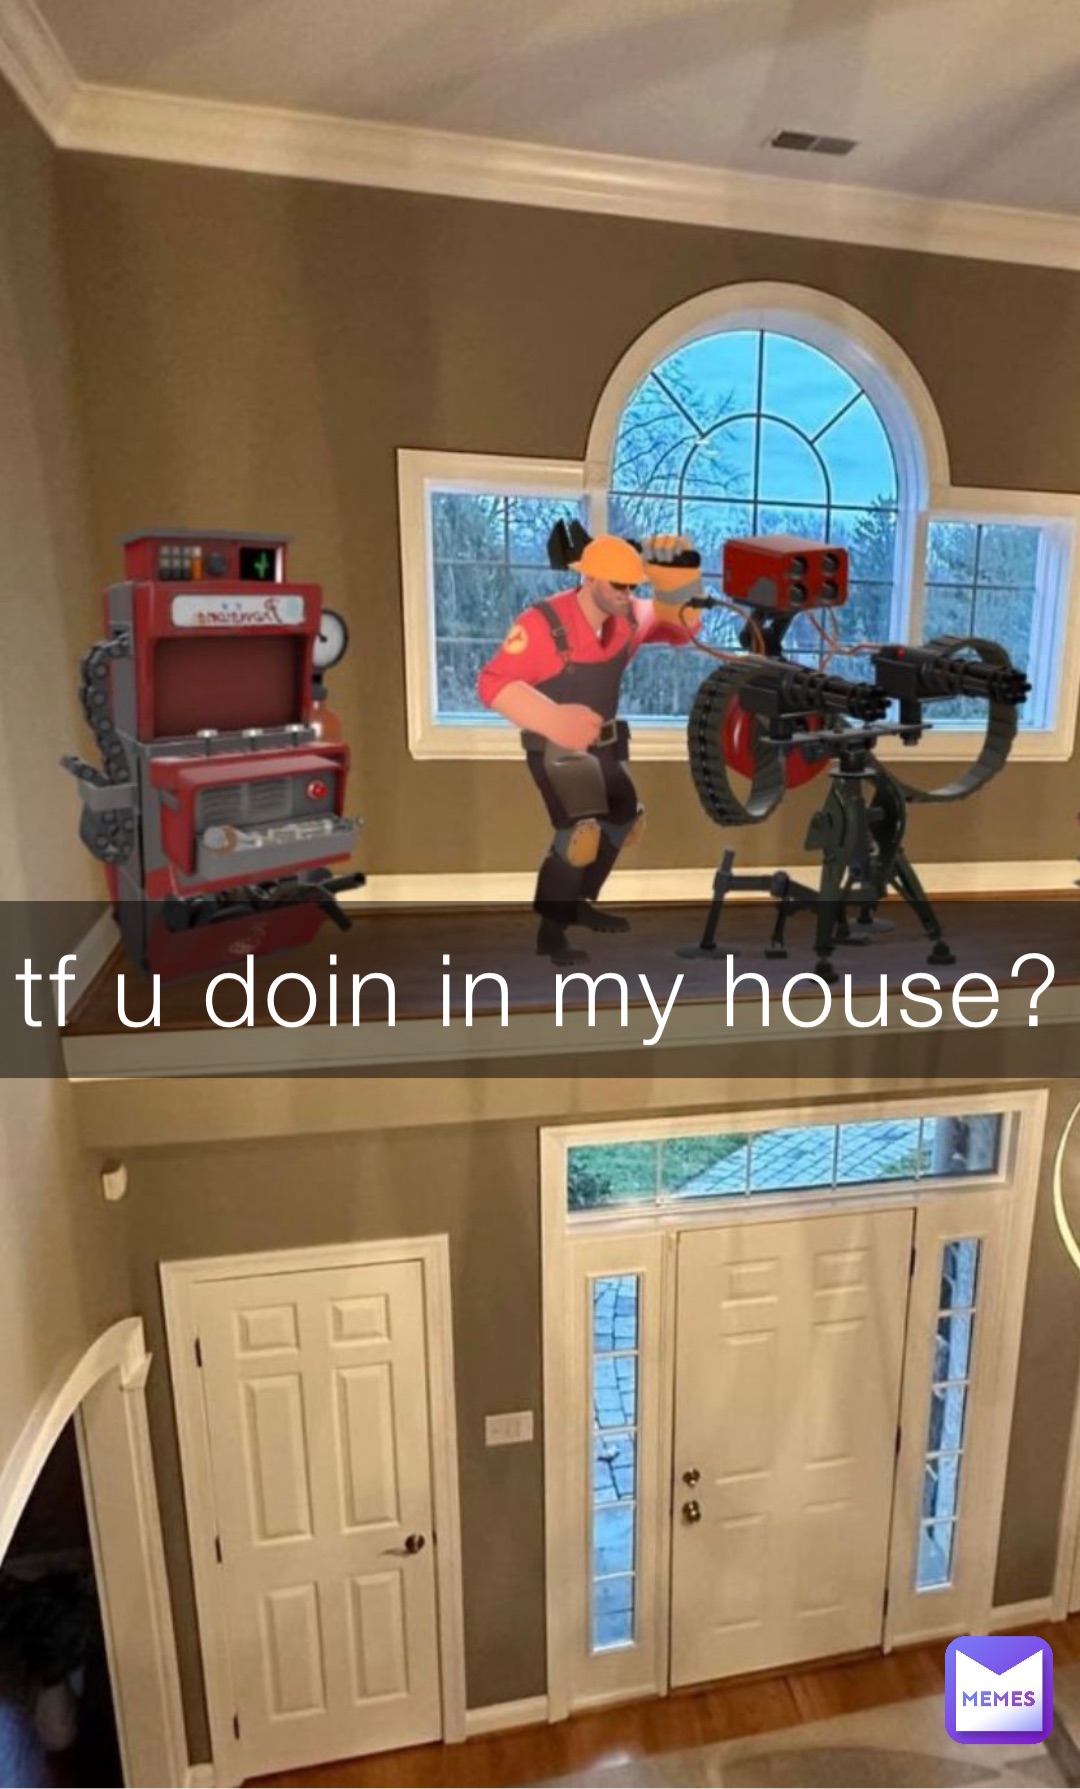 tf u doin in my house?